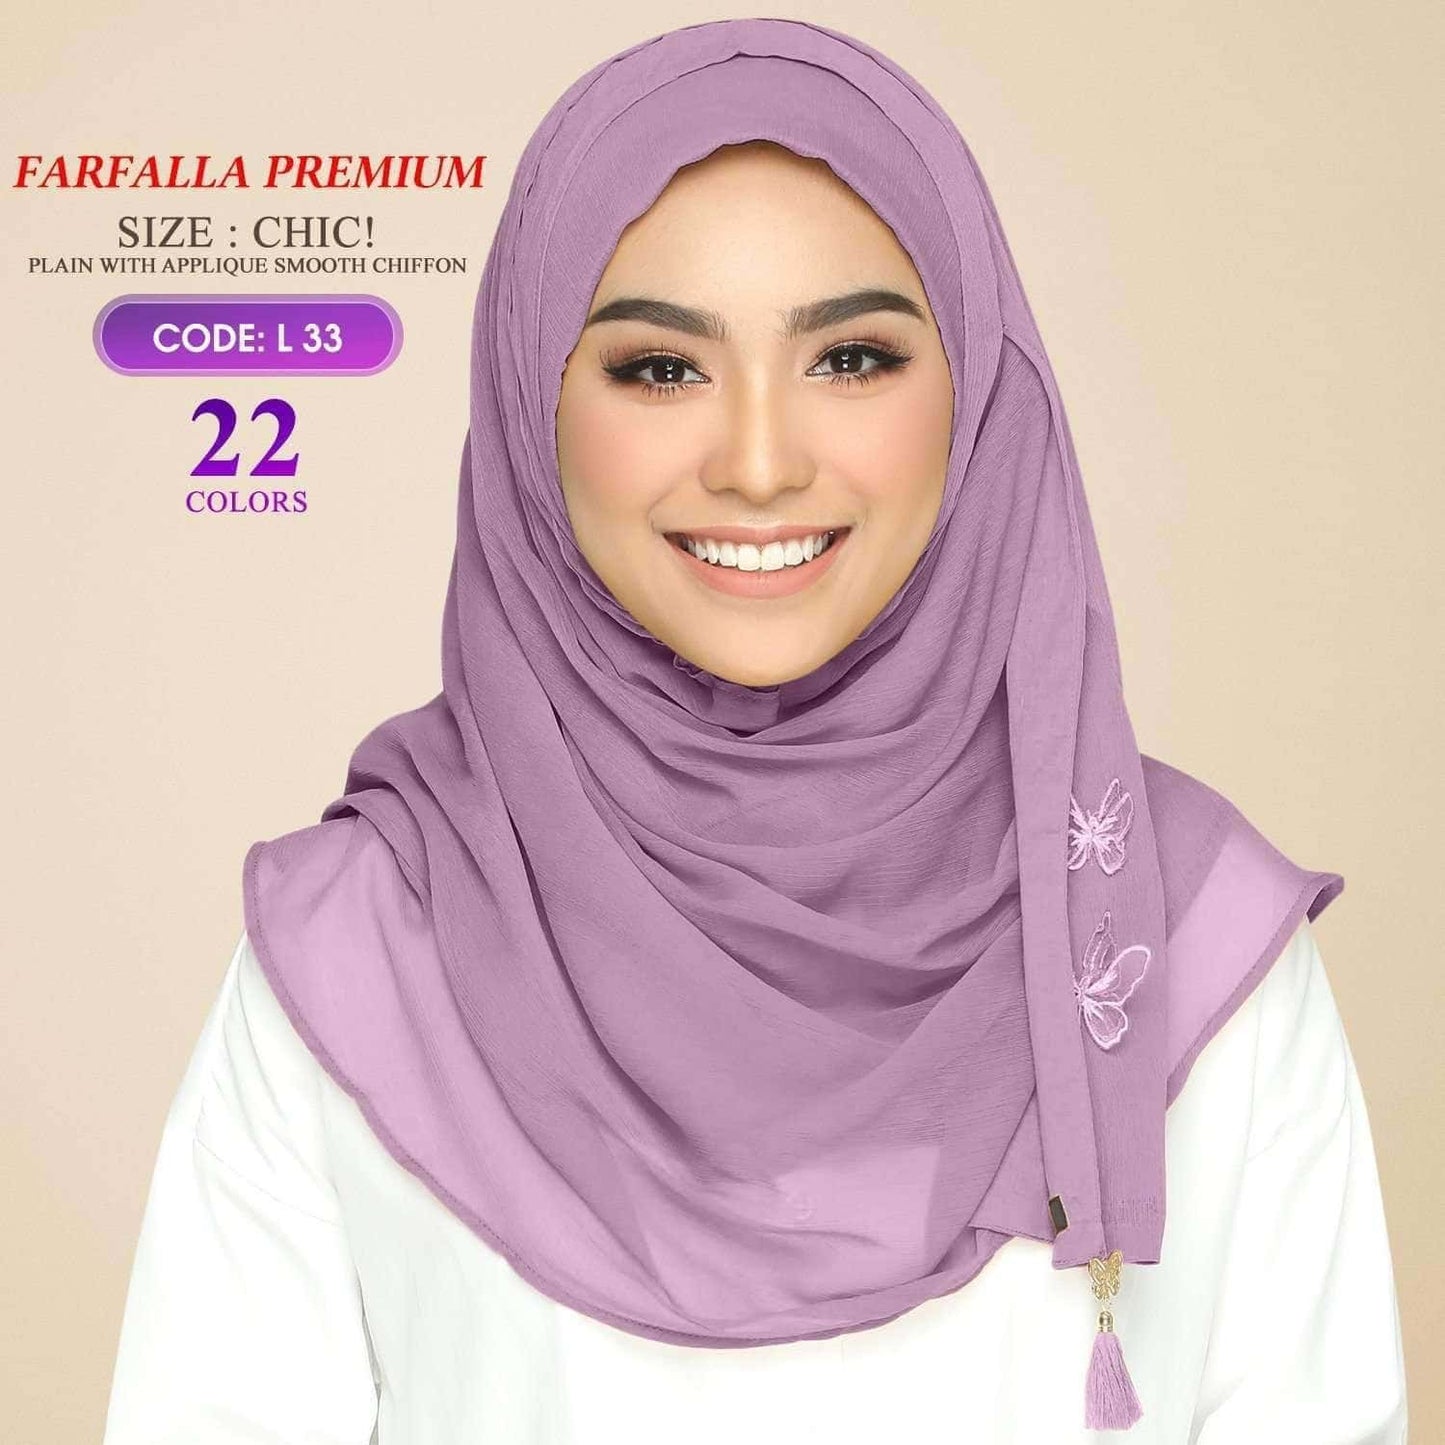 Bokitta Farfalla Premium Chic! Plain Collection RM19